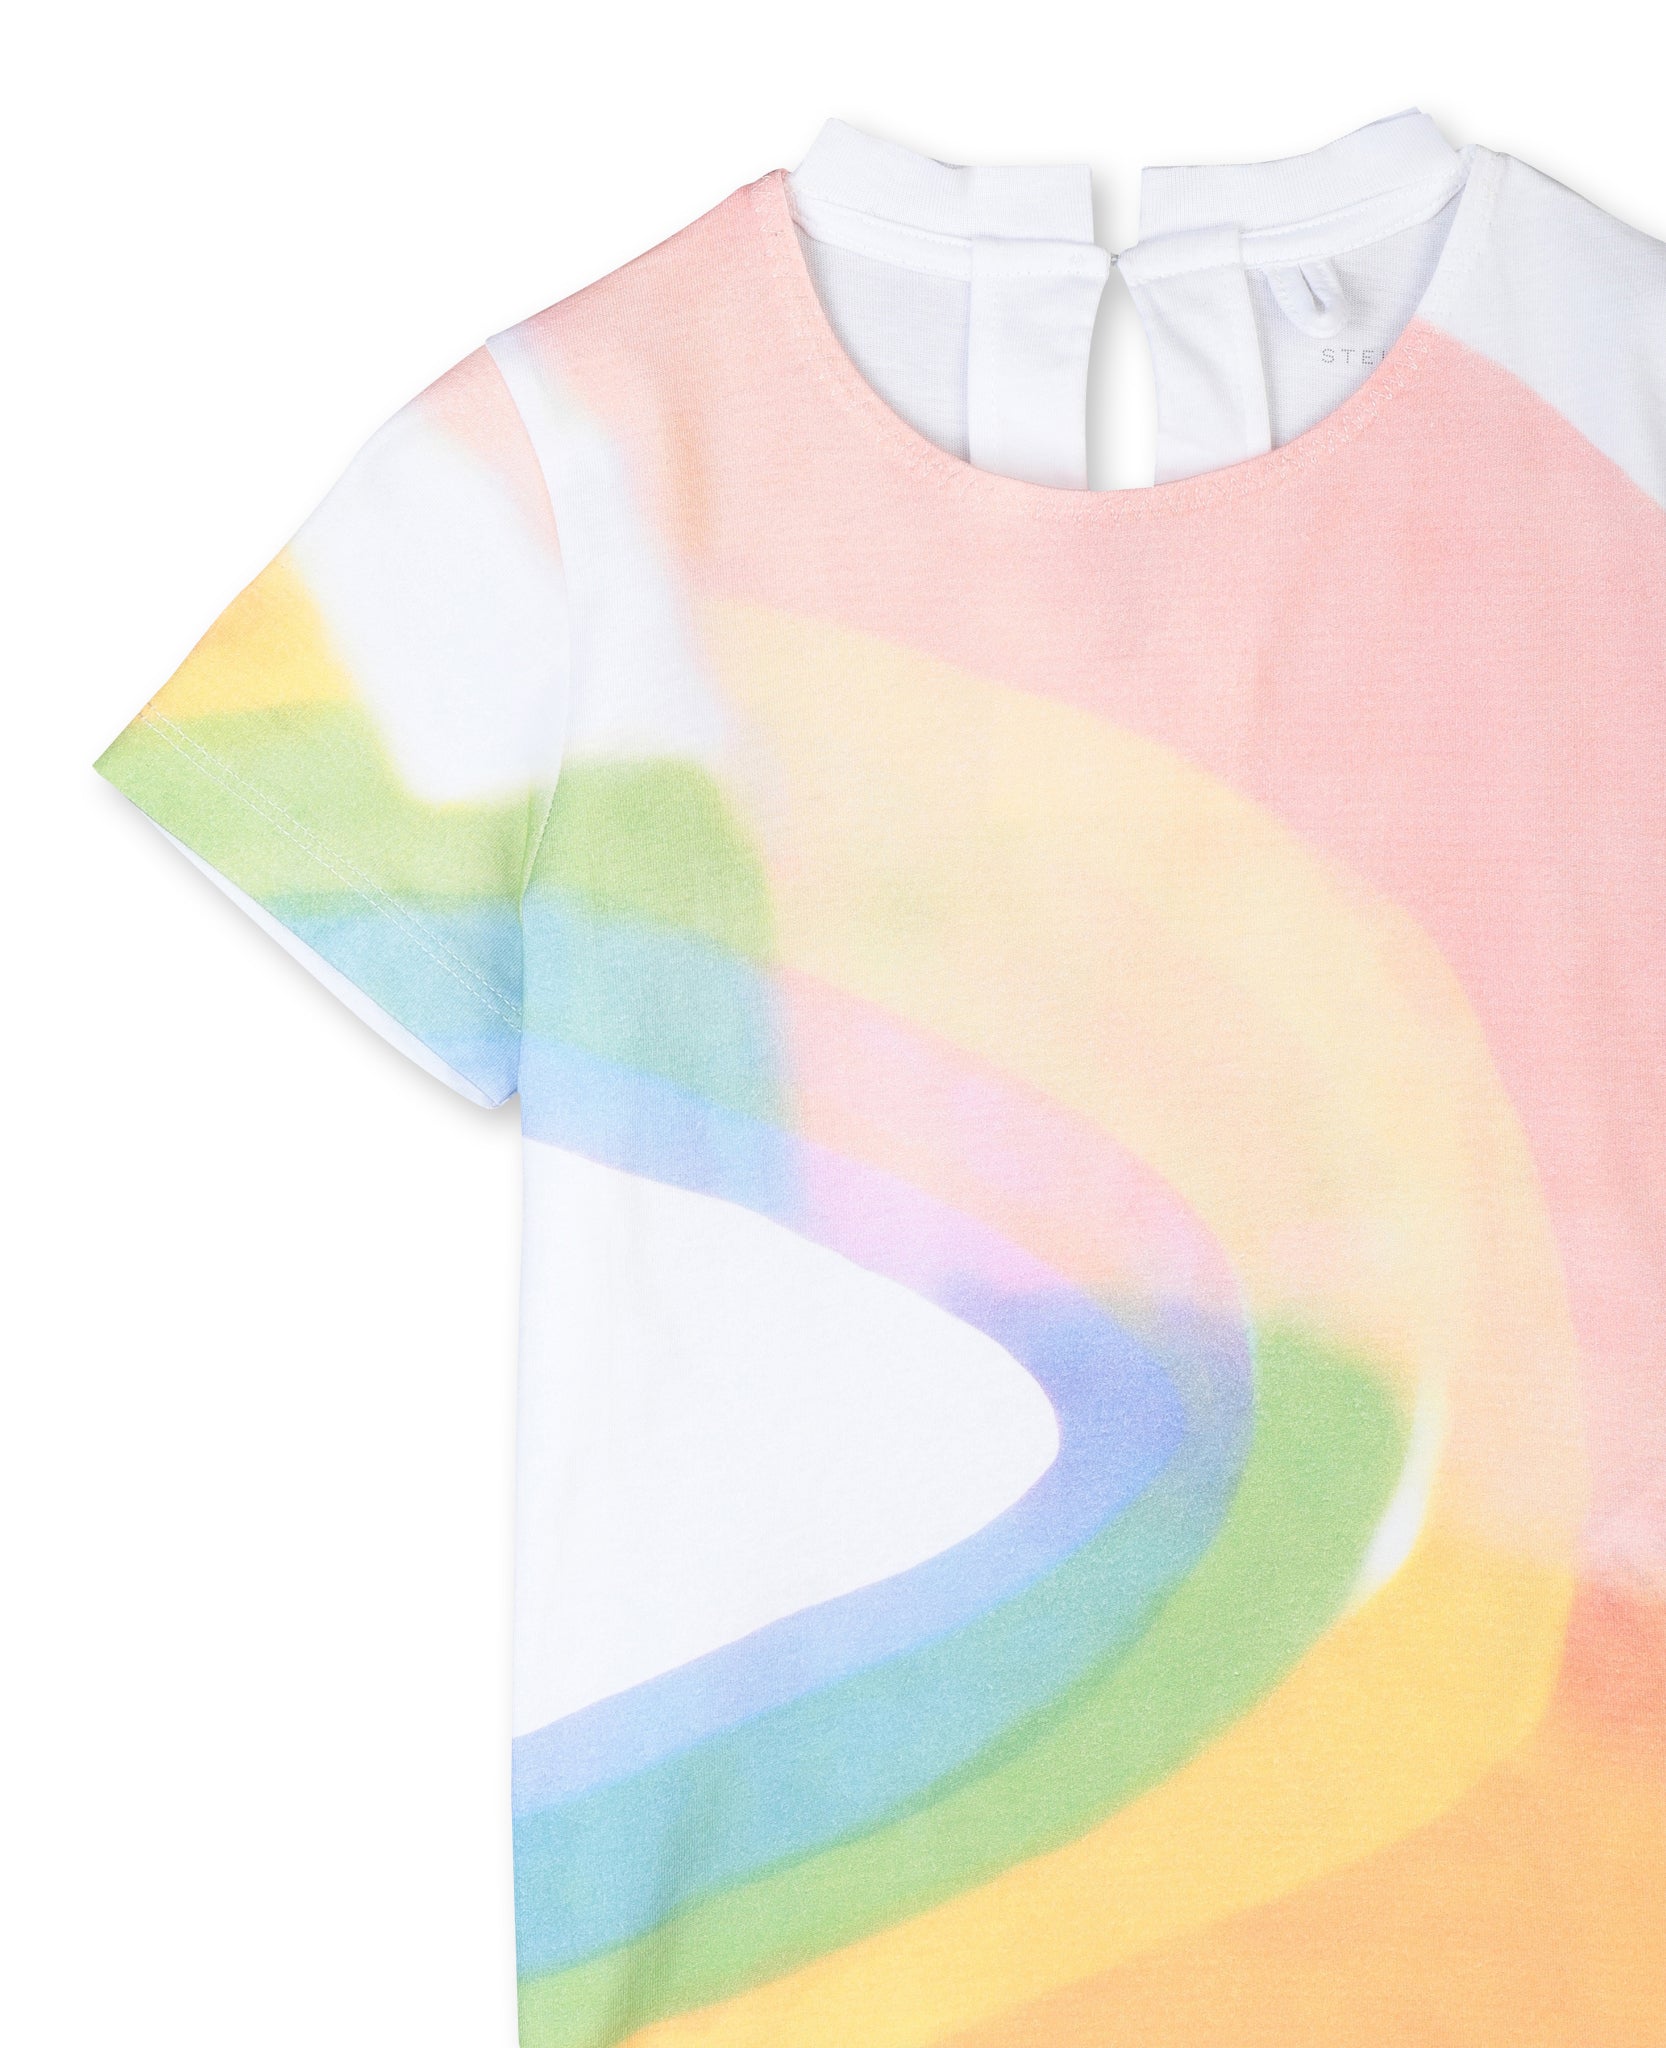 Girls White Rainbow Watercolor Cotton T-shirt